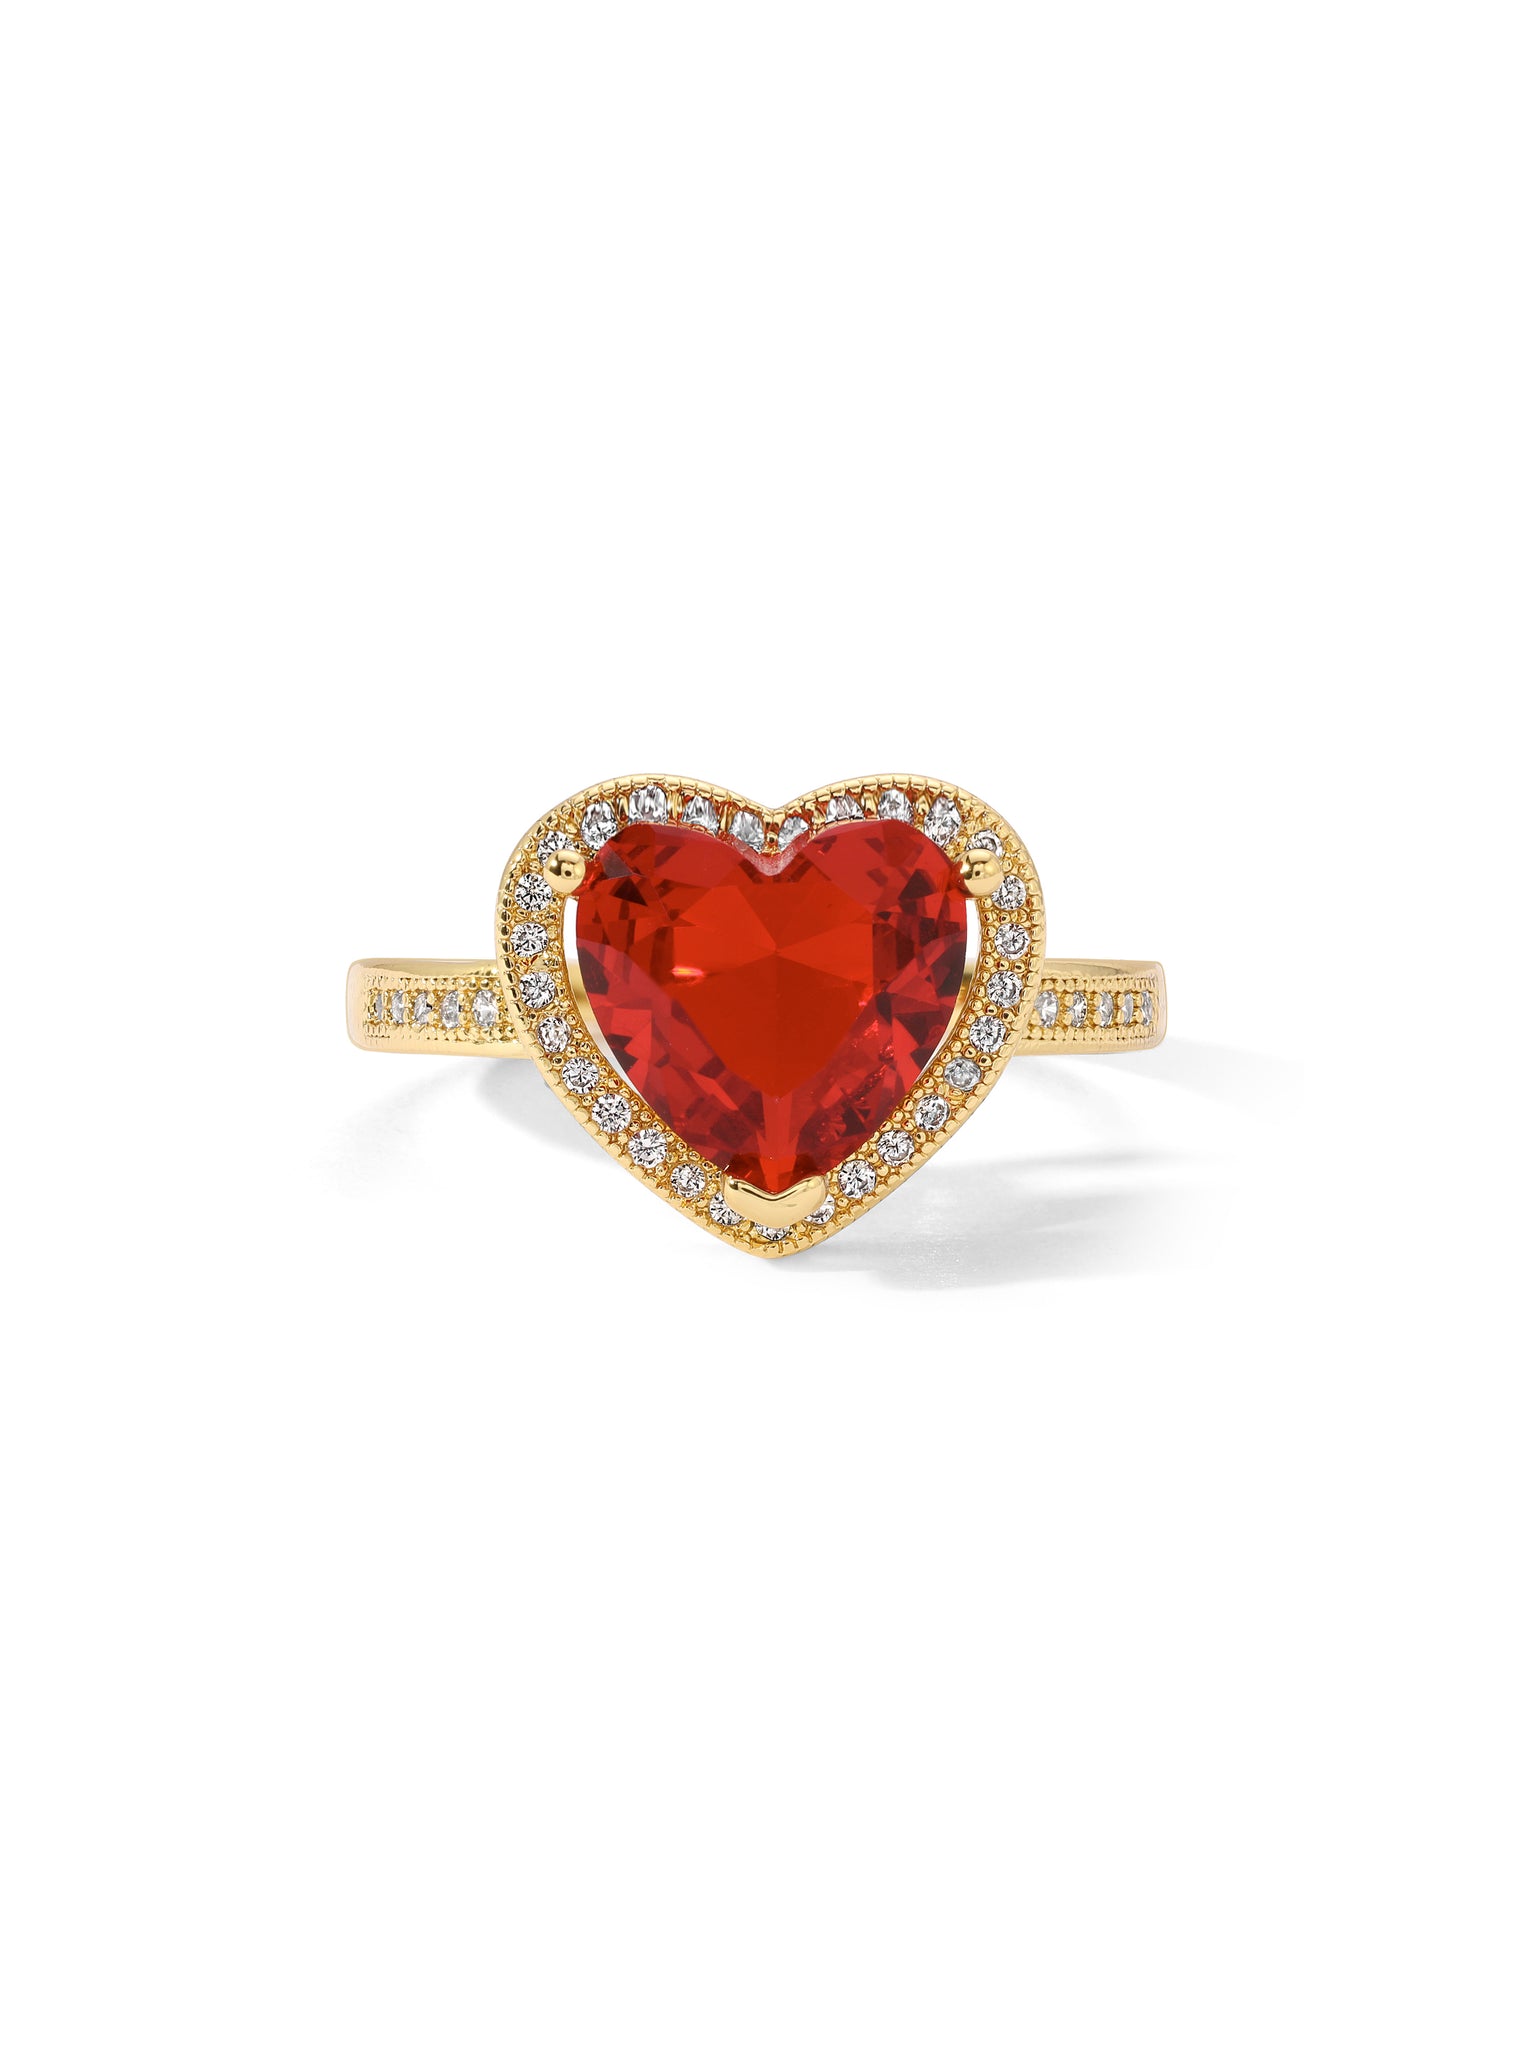 One Heart Diamond Ring